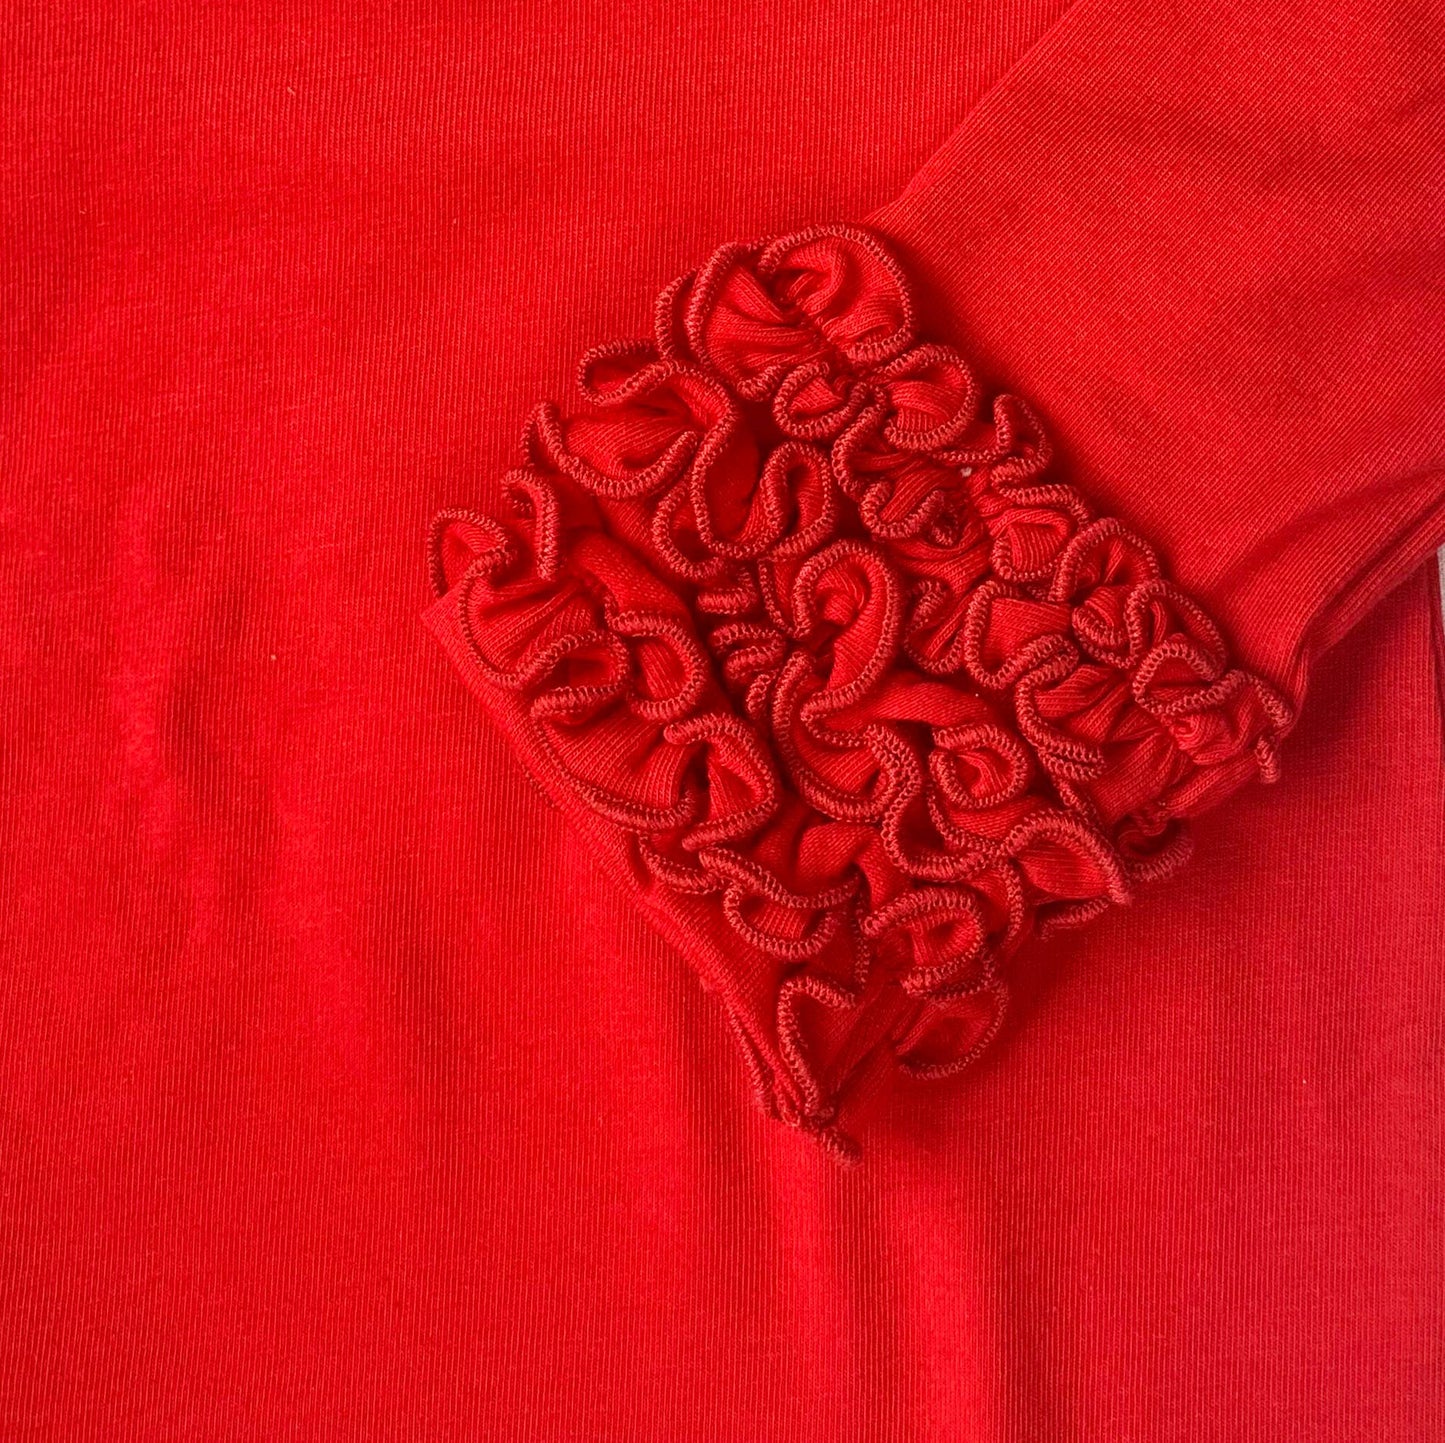 Ruffle Layering T-Shirt - Red